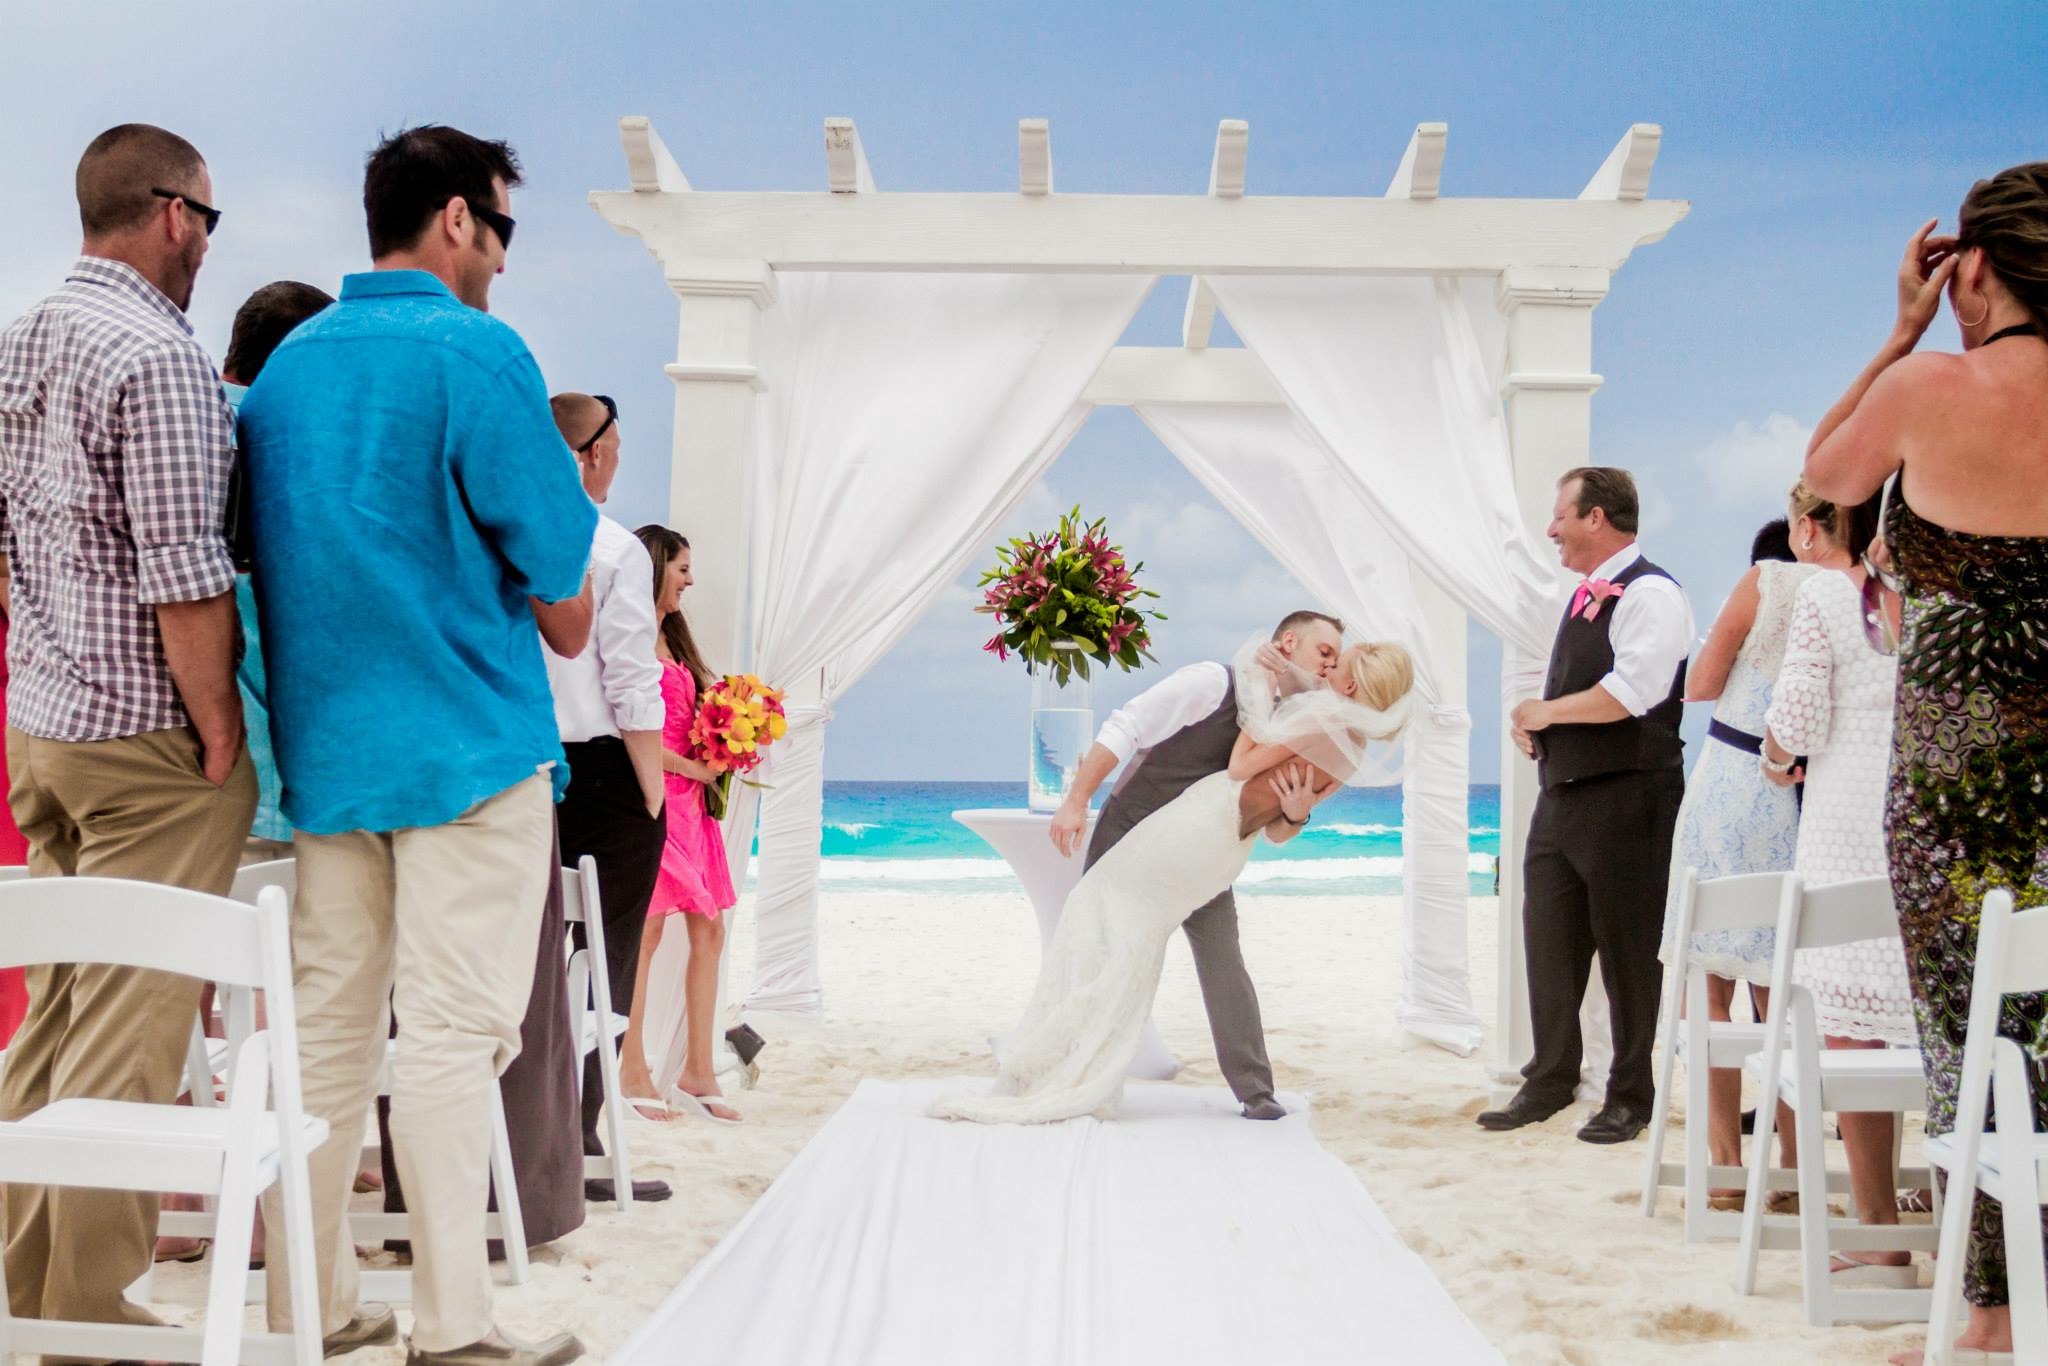 krysten-reed-cancun-beach-wedding-12.JPG